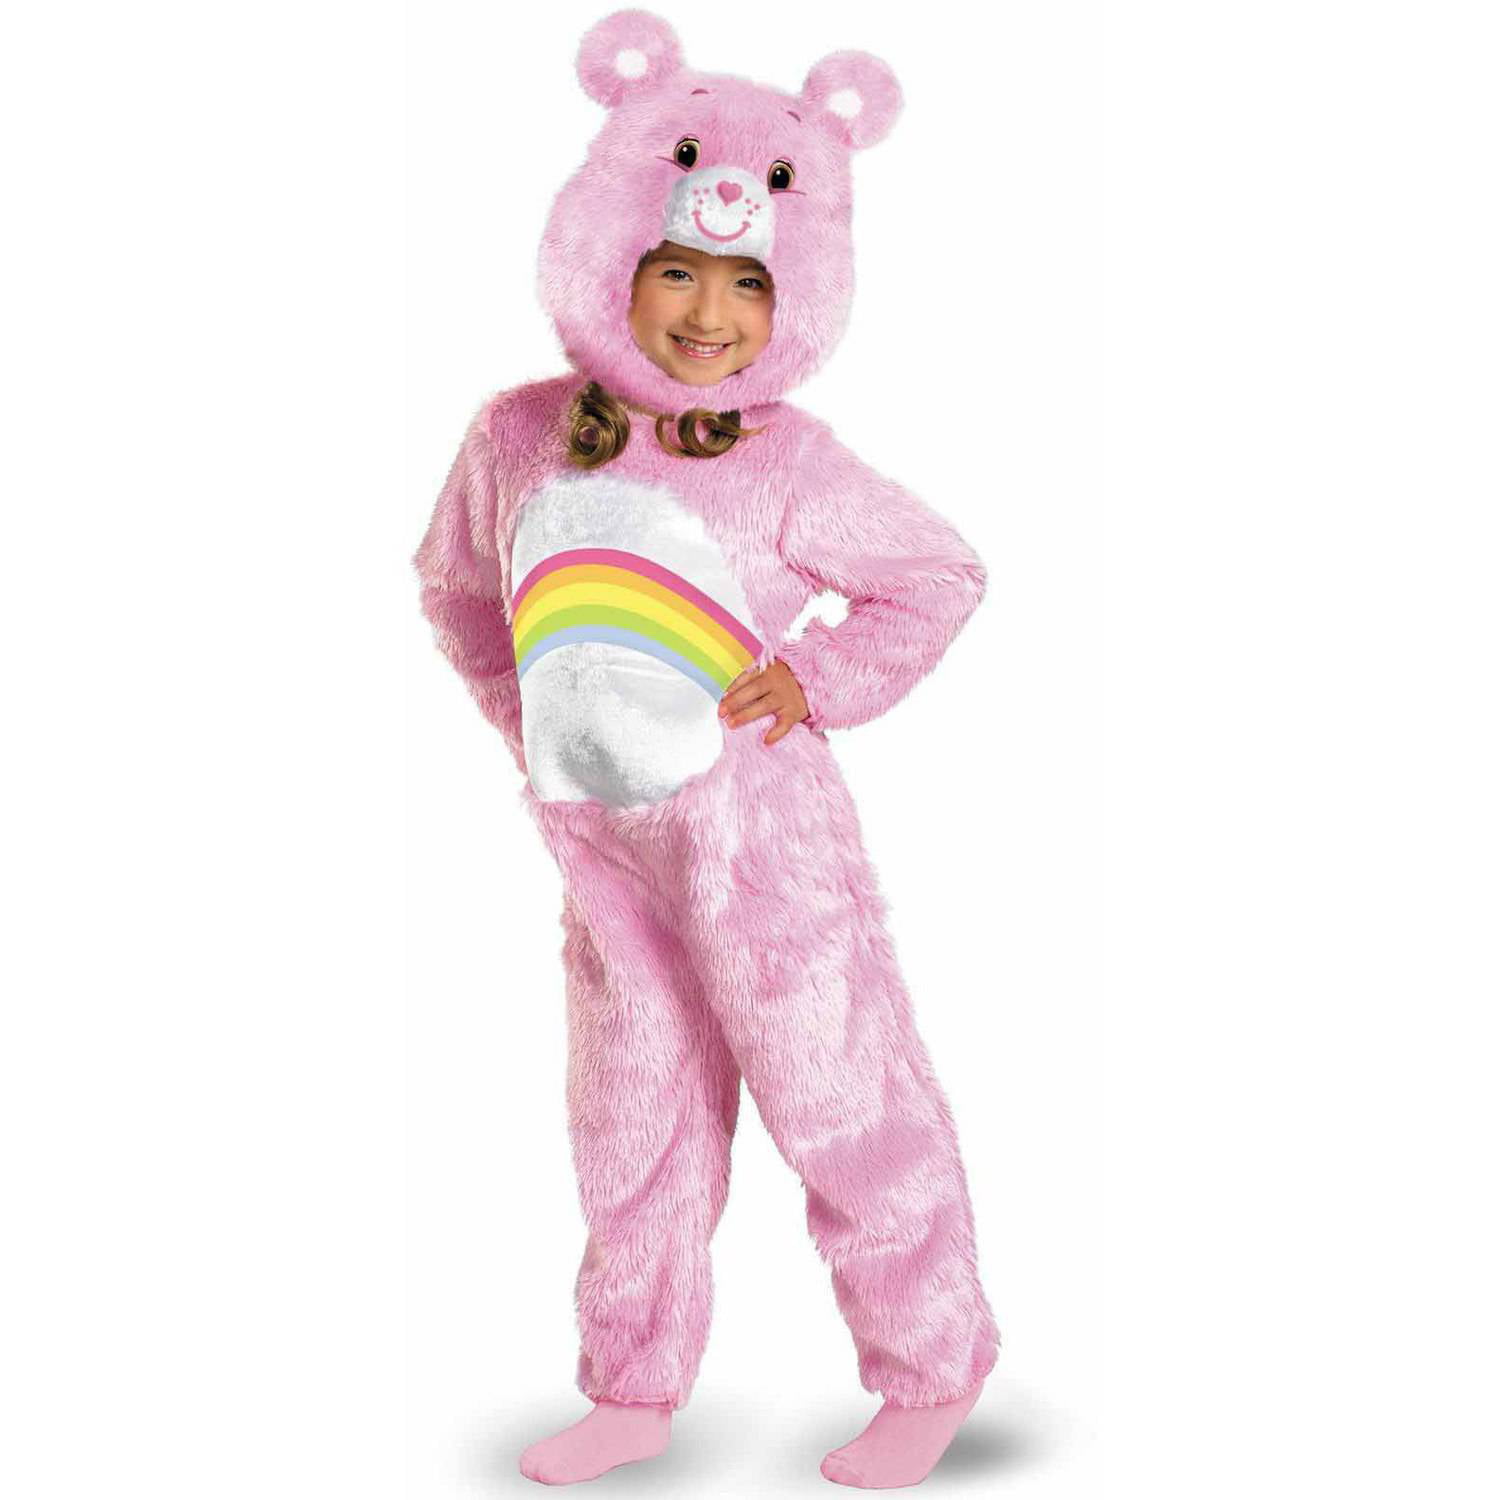 Little Girls Childrens Care Bears Cheer Costume